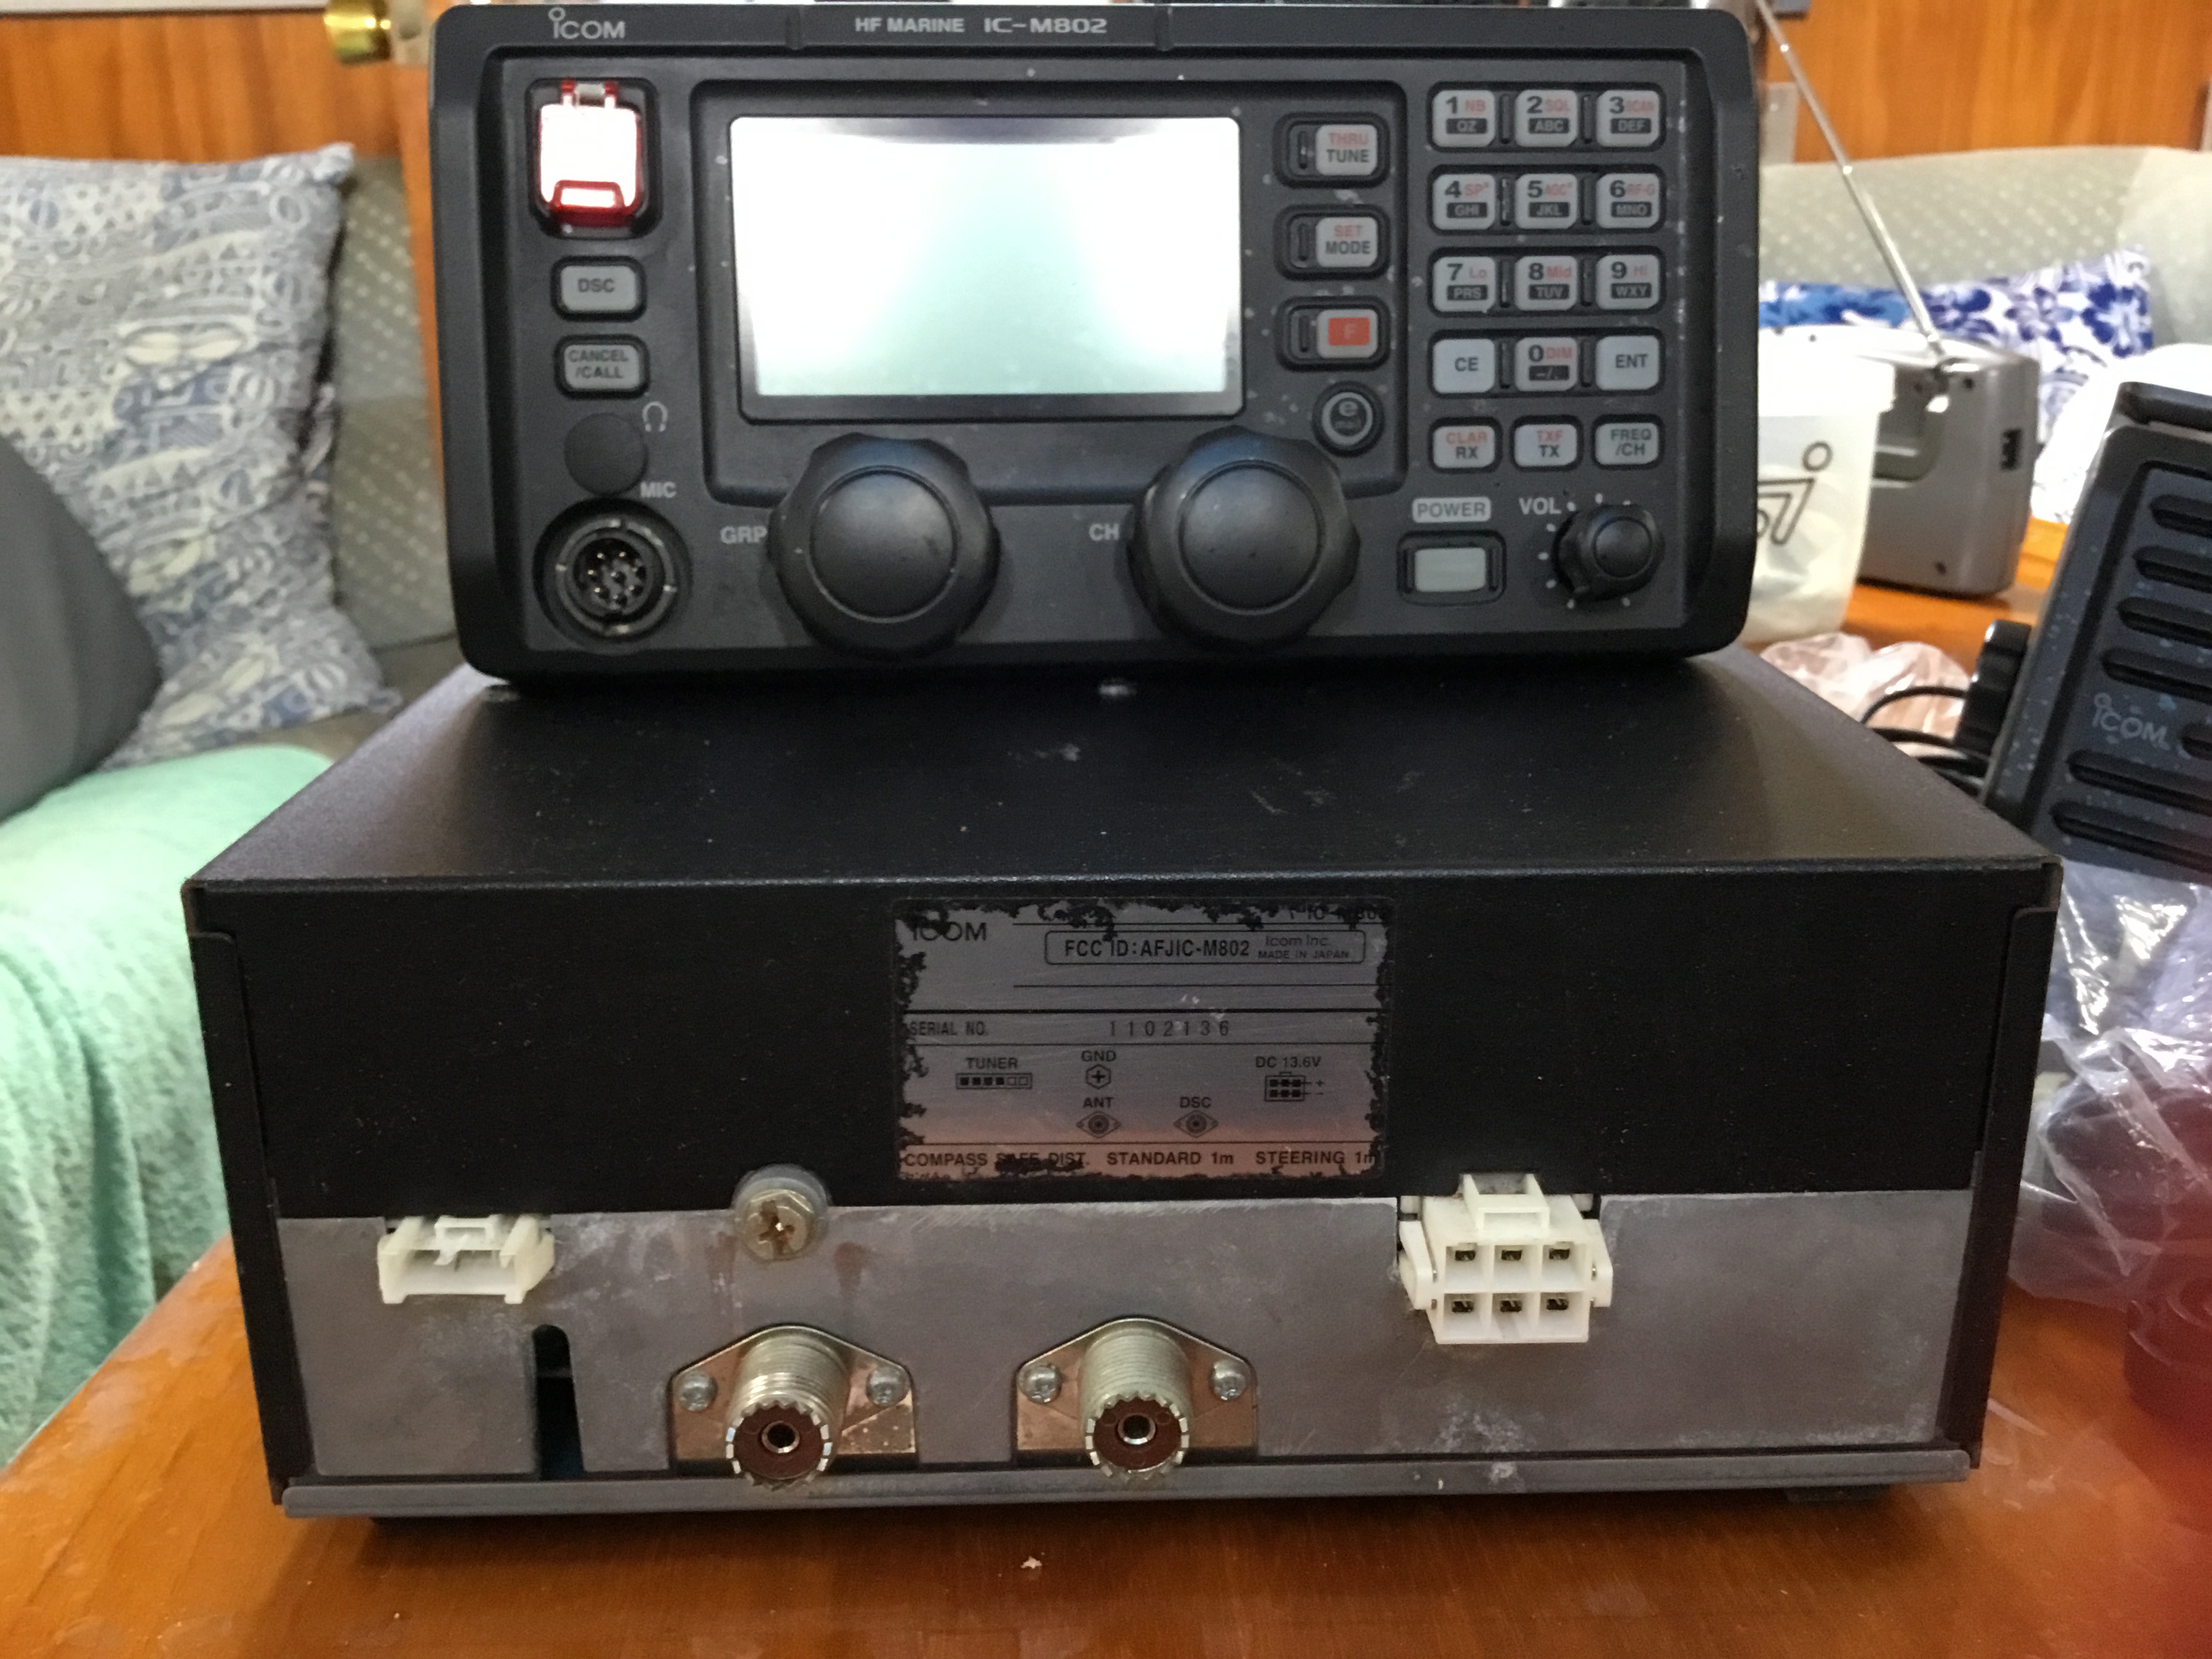 Radio BLU HF MARINE ICOM IC-802